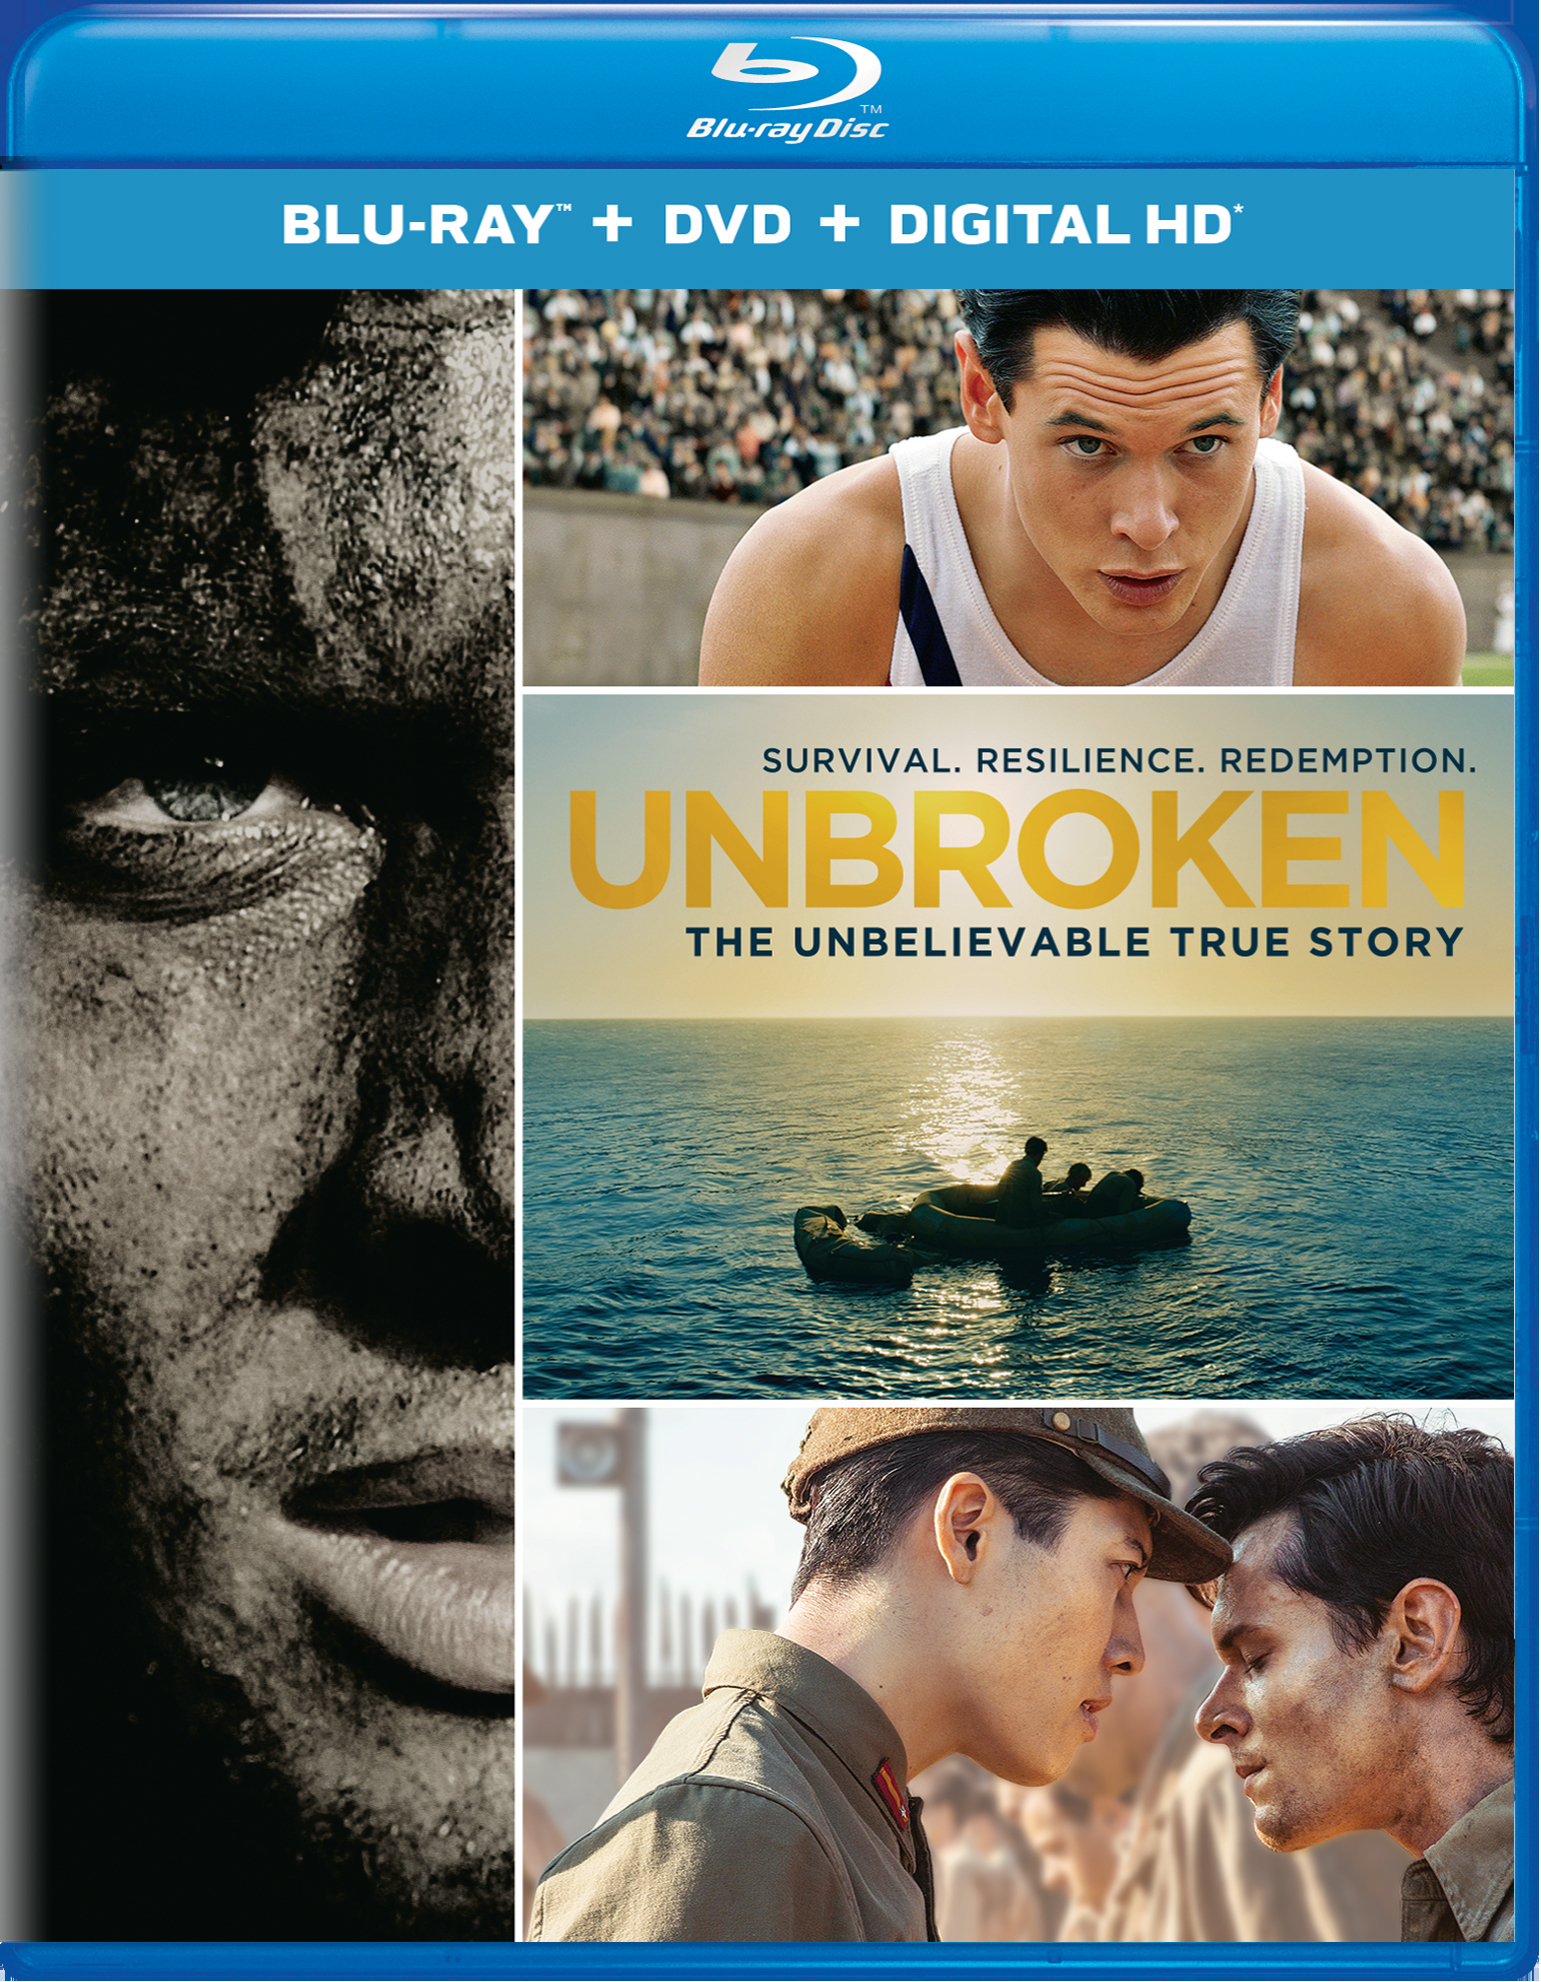 Unbroken (DVD + Digital) - Blu-ray [ 2014 ]  - War Movies On Blu-ray - Movies On GRUV